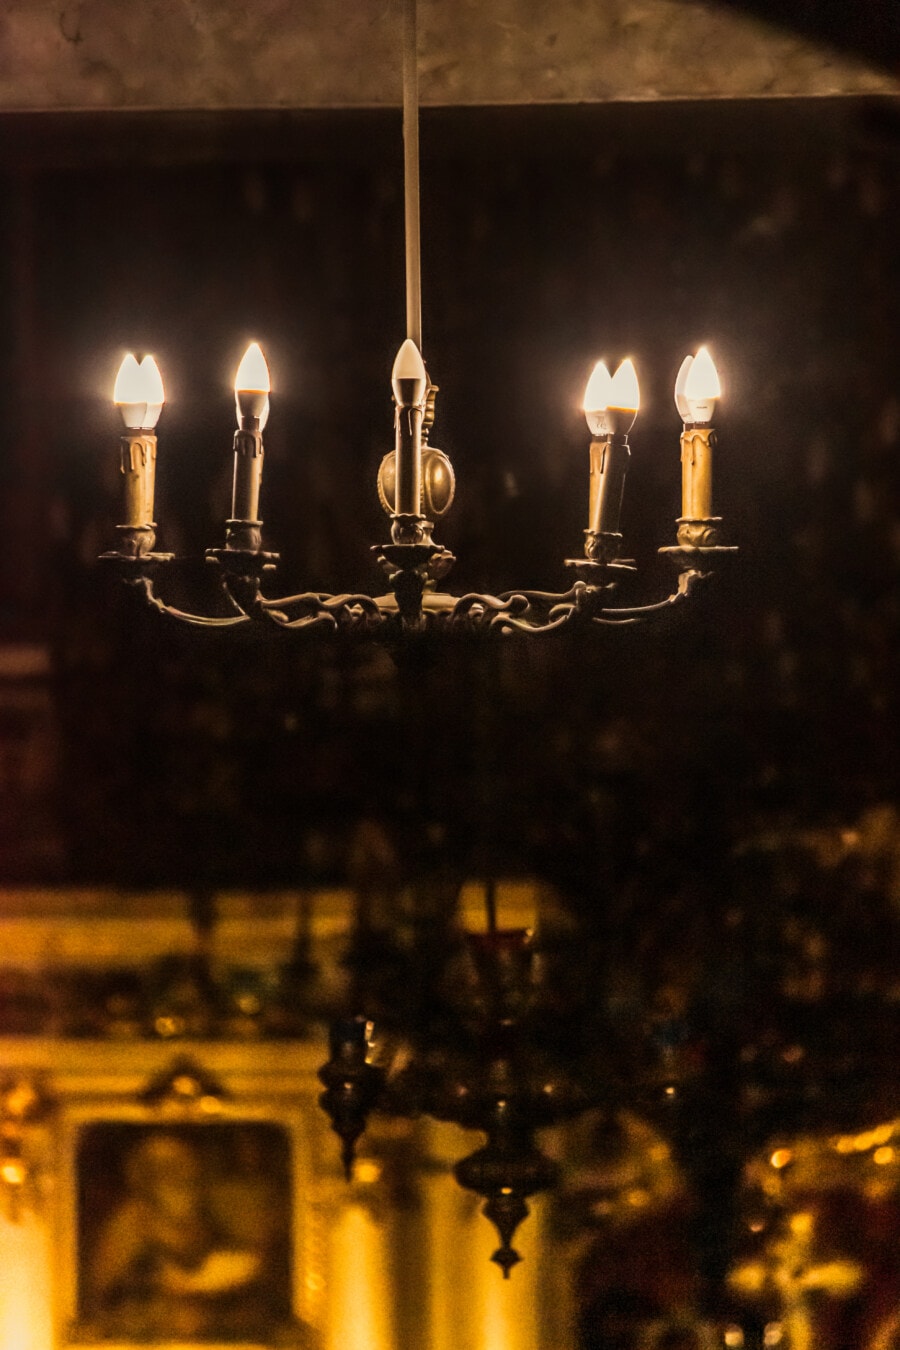 chandelier, elegant, church, orthodox, light, religion, flame, lamp, dark, illuminated